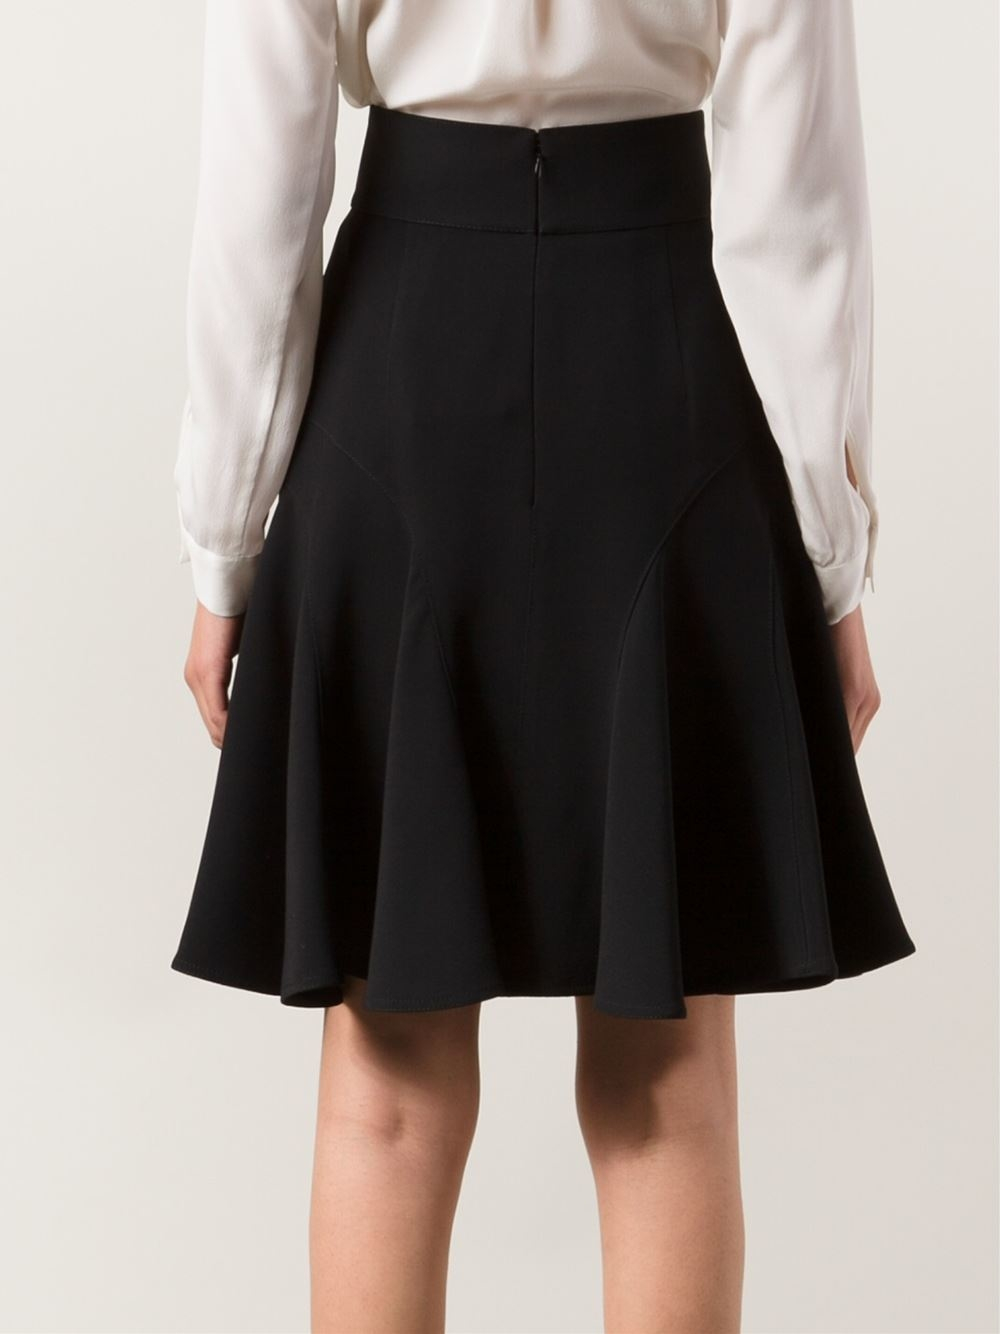 Lyst - Givenchy A-Line Godet Skirt in Black